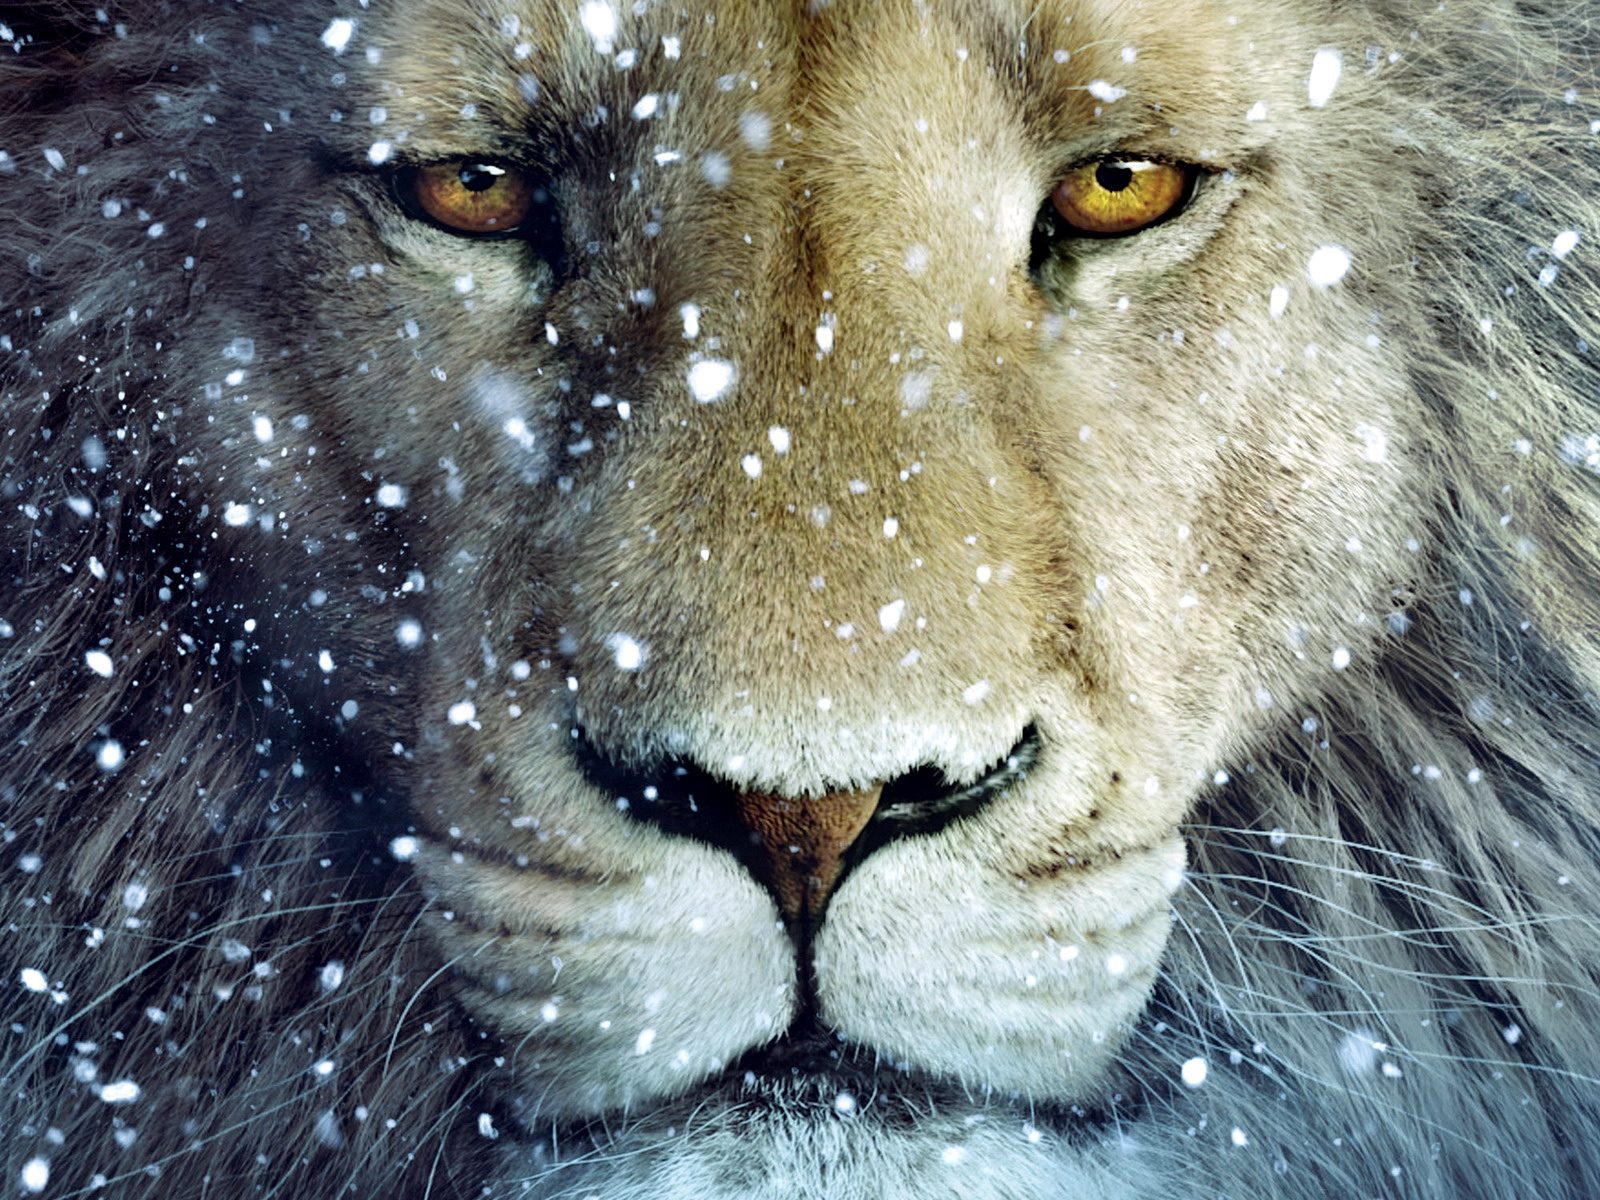 https://blogger.googleusercontent.com/img/b/R29vZ2xl/AVvXsEhHd8ncQm1FVShMaYkWK6YNFC4M3gtqdefoRCIpa8O70hdZ6ydT0FoExHu9qnBD7F2ye29NmJN9YoUy3mZzClDp0ejYelgXeg6RvPLfvVVcMEiRUekrKUTLbCDfXlA3nXu1CwXg24cLuR4/s1600/Aslan-Lion-3-The-Chronicles-of-Narnia-Wallpaper.jpg